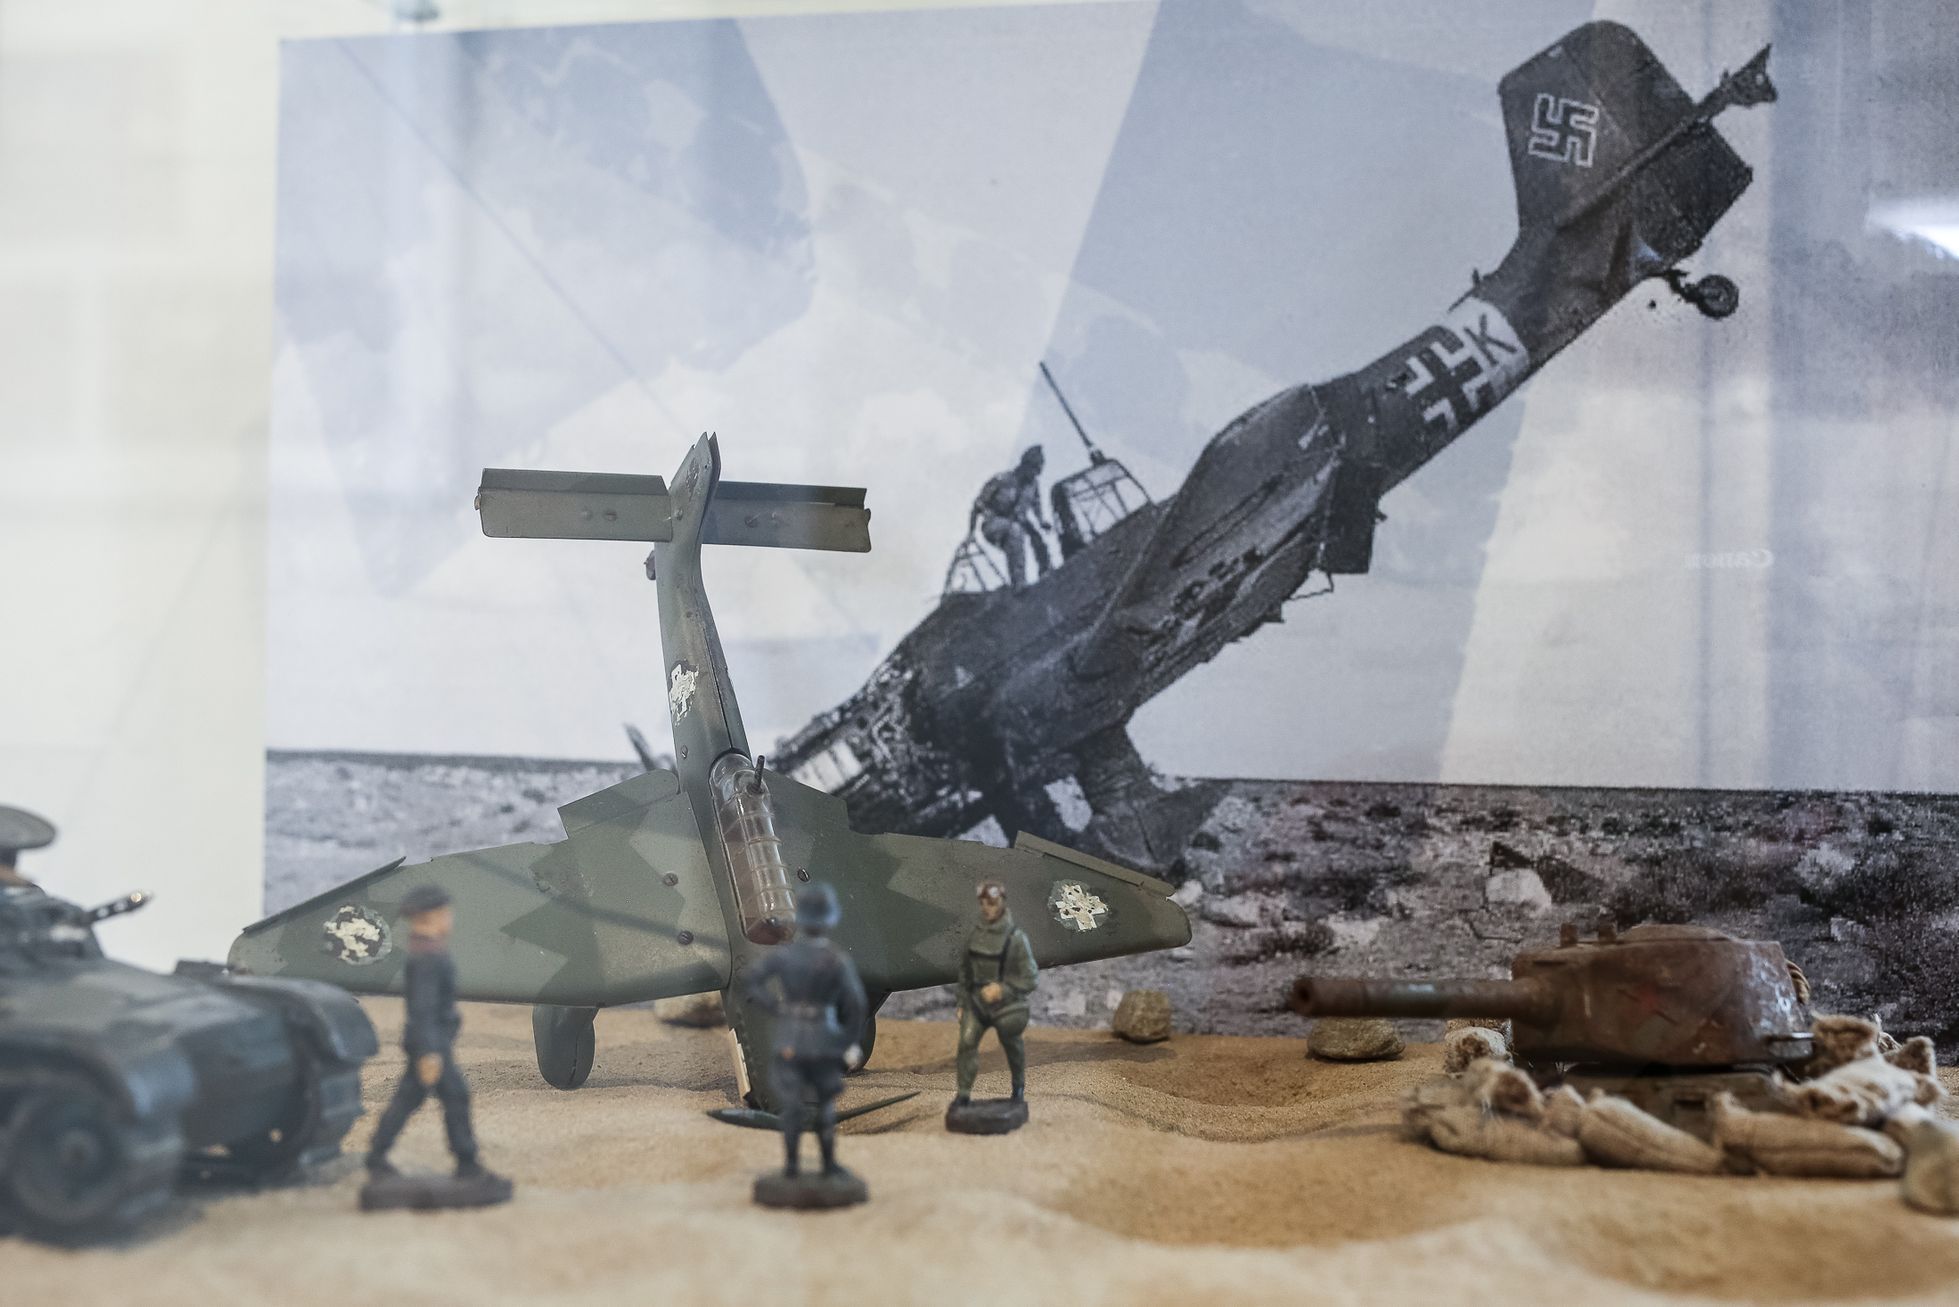 Výstava miniatur, historických hraček, diorámat v Litomyšli - historie 1918 - 1948